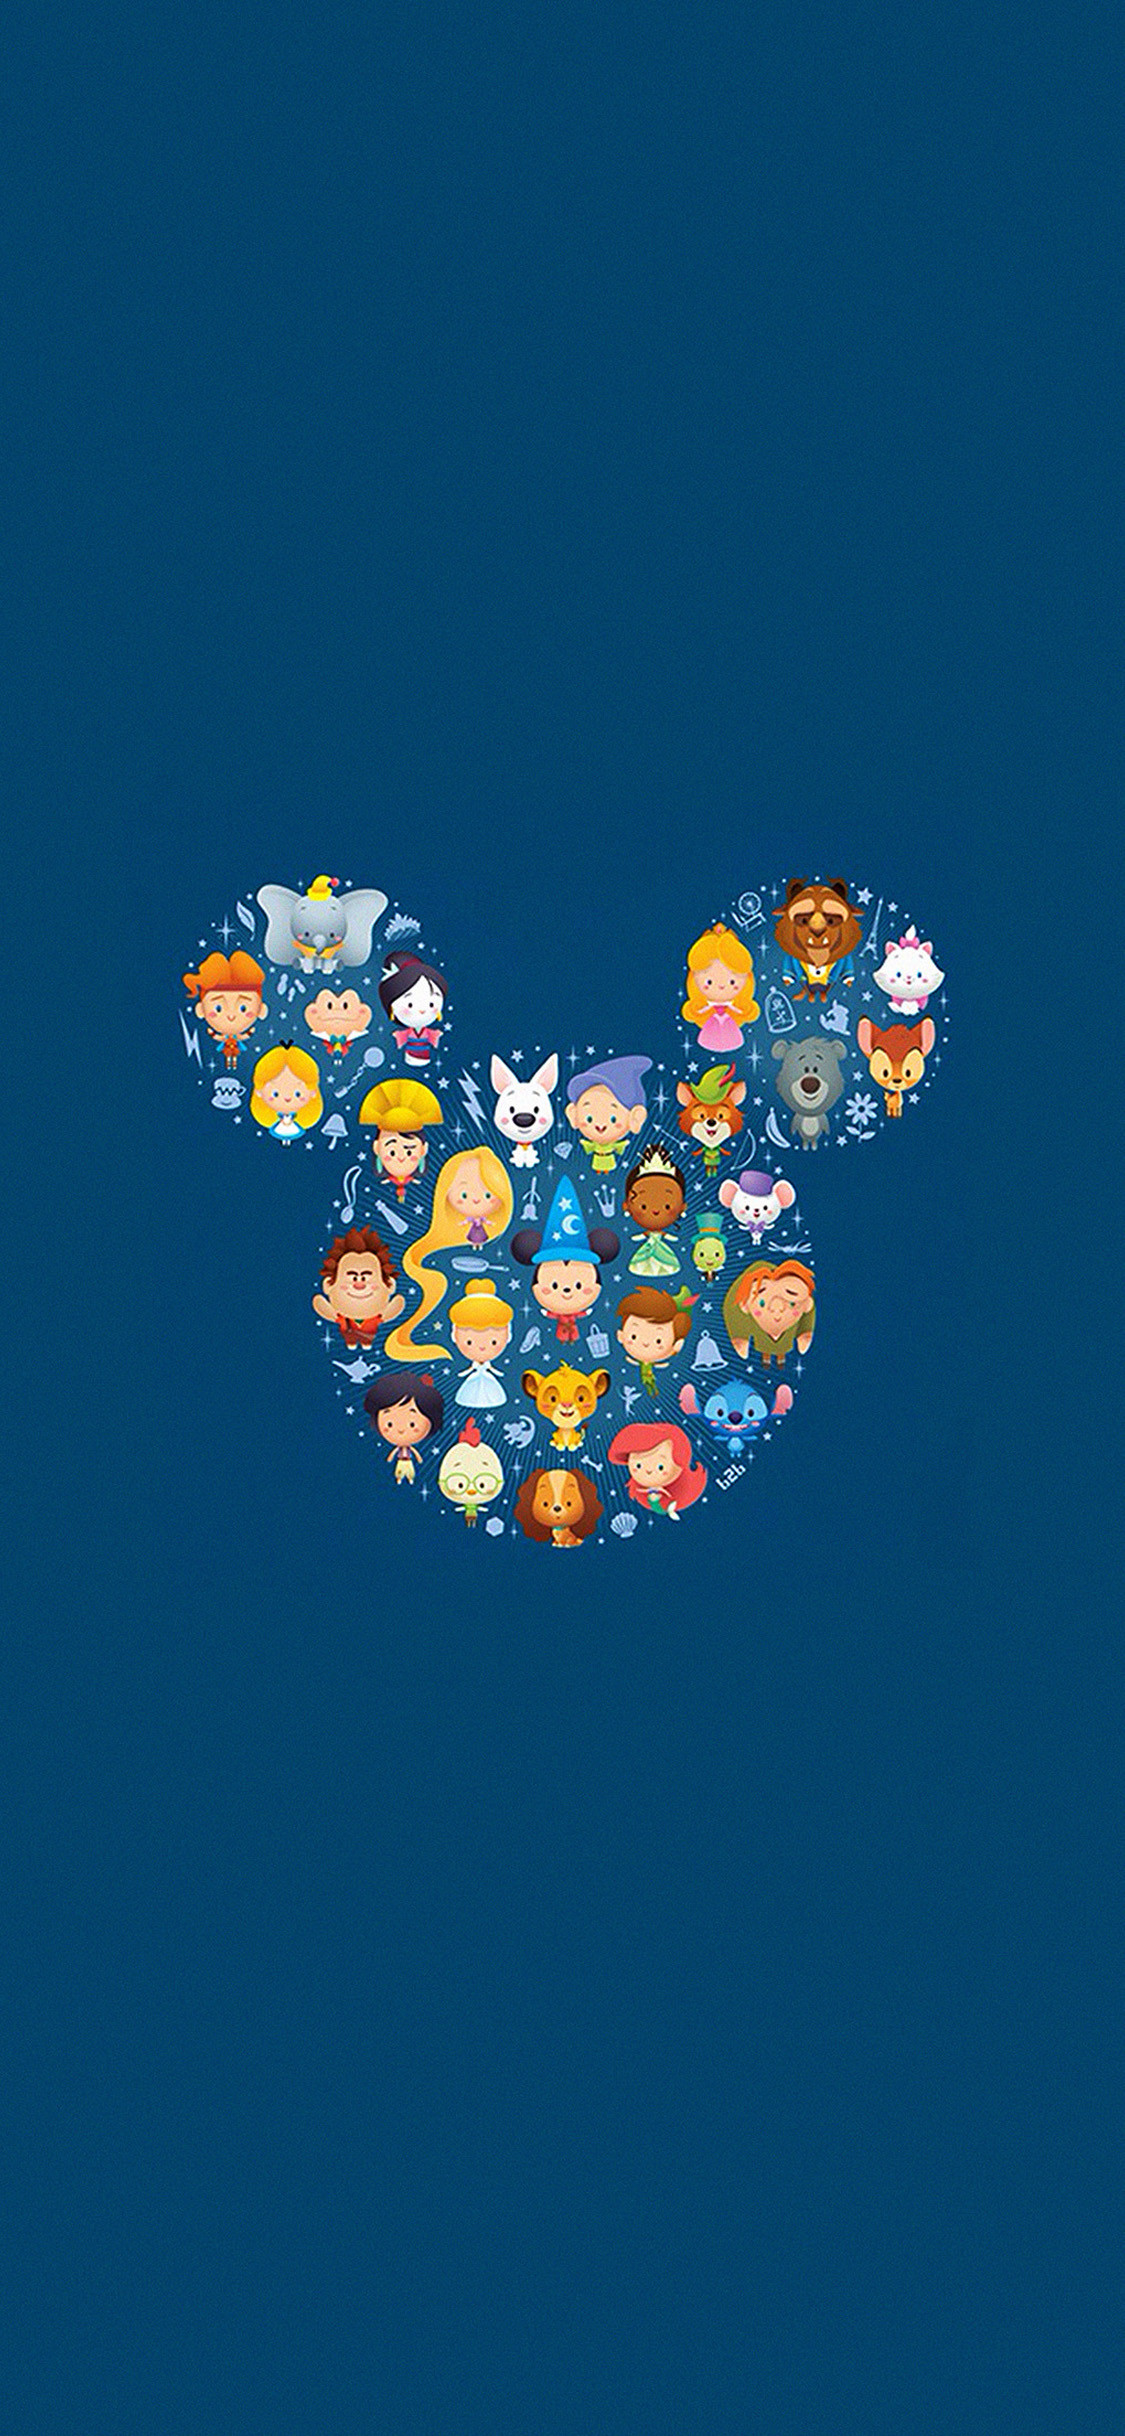 Cute Disney Characters iPhone Wallpaper